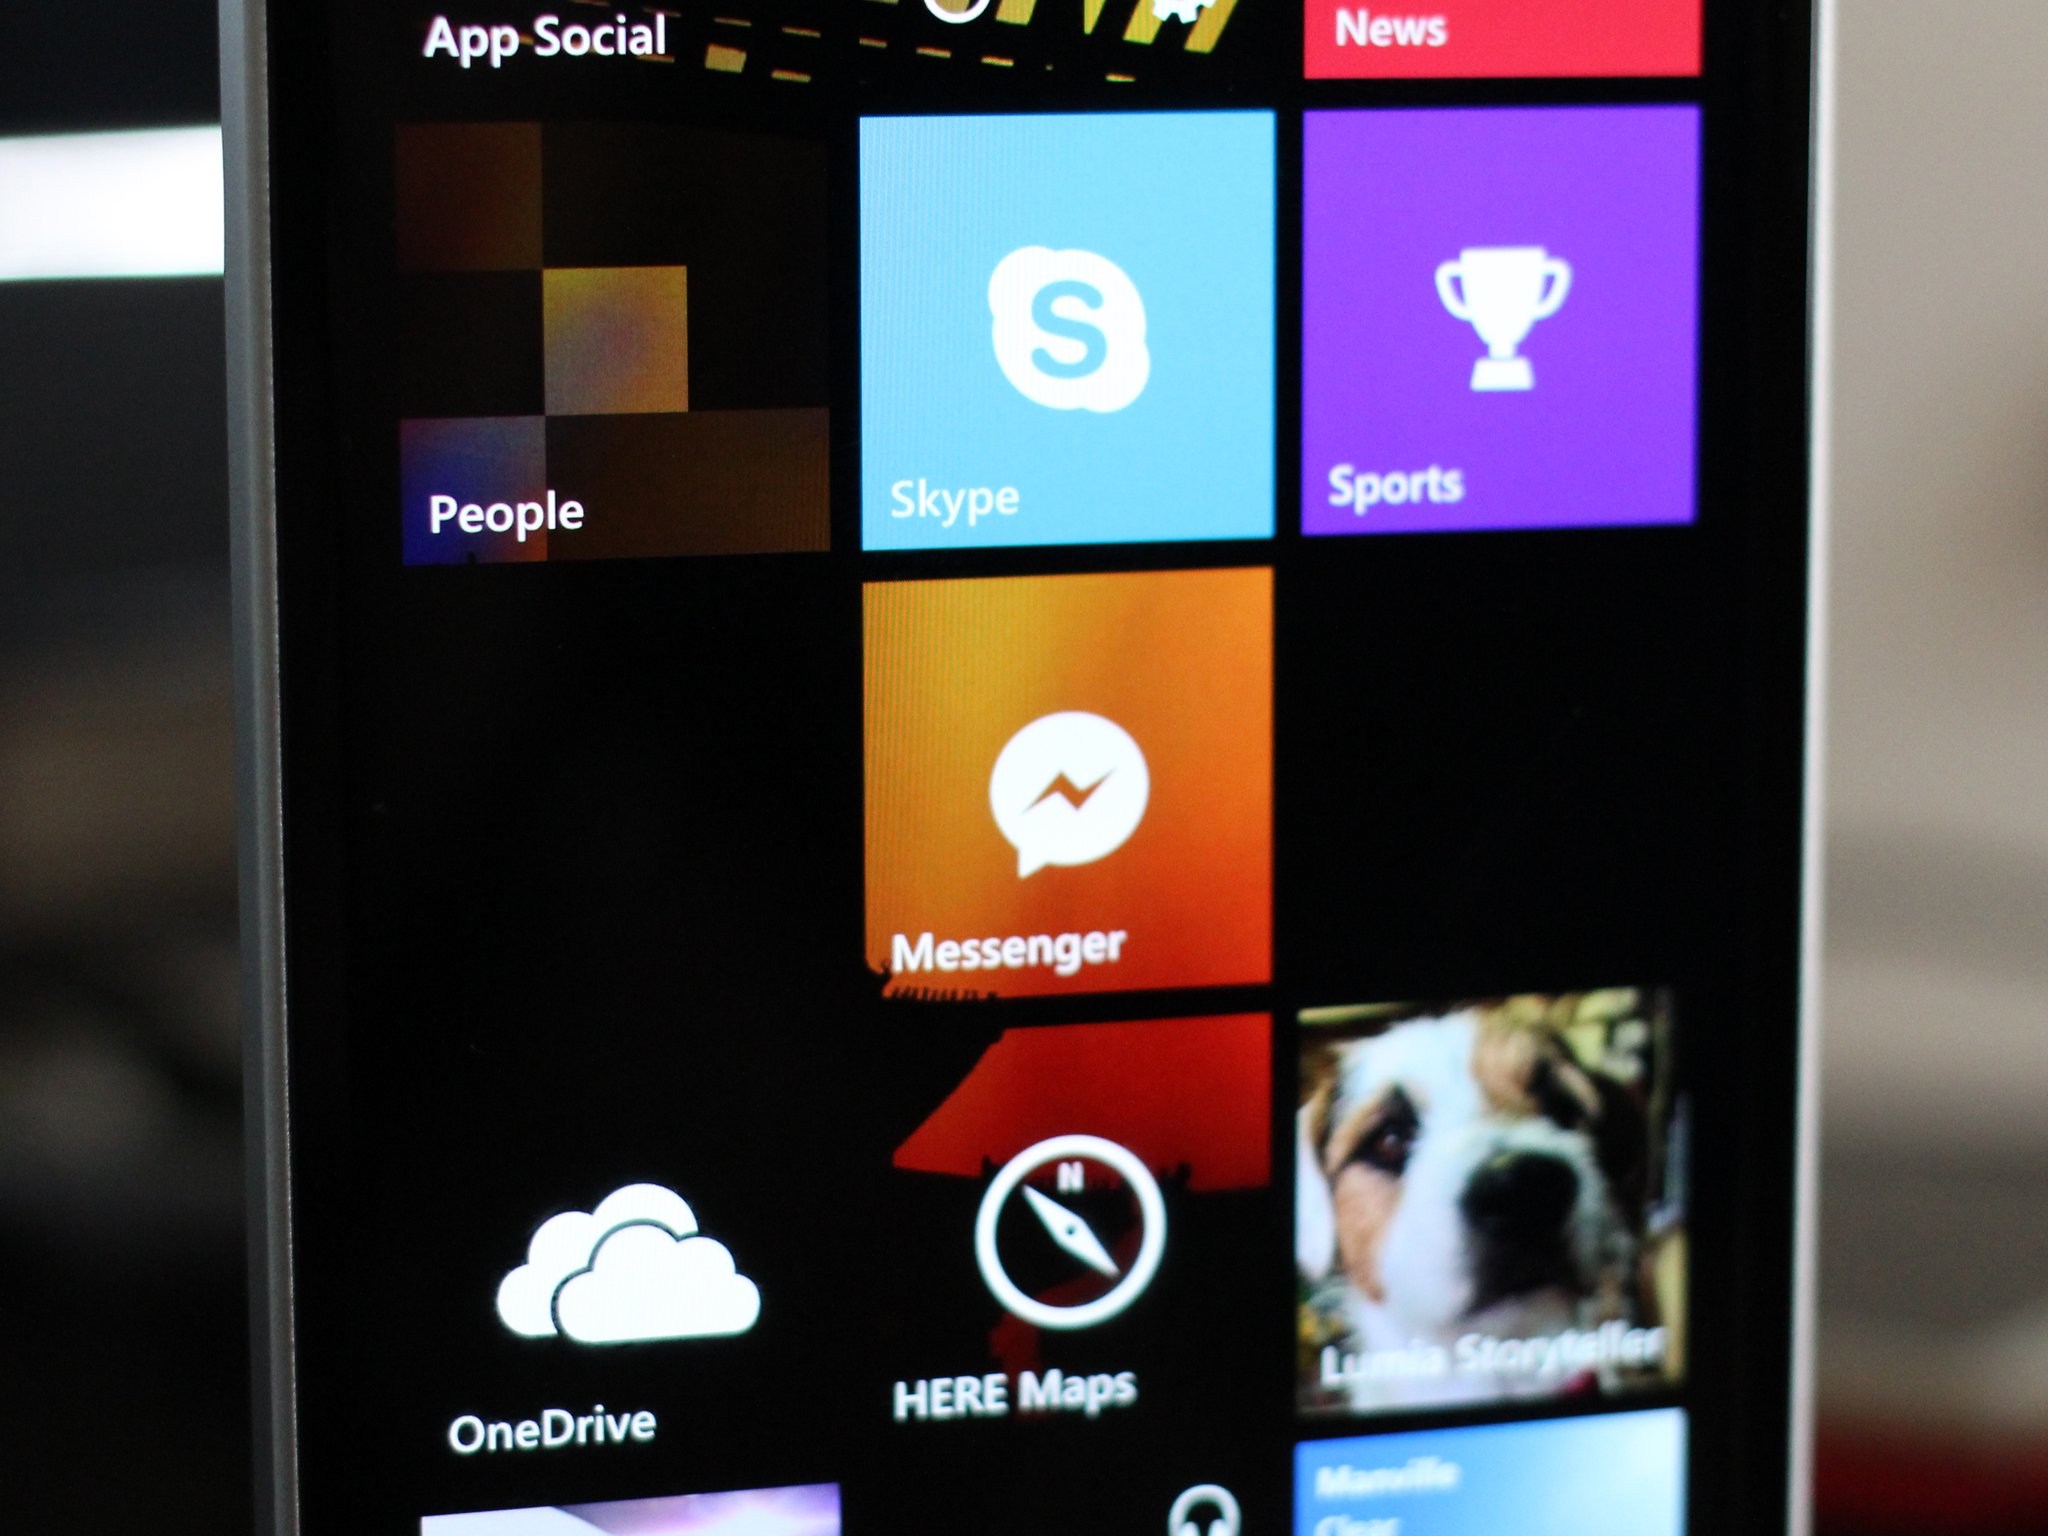 fb-messenger-icon-lumia-930.jpg